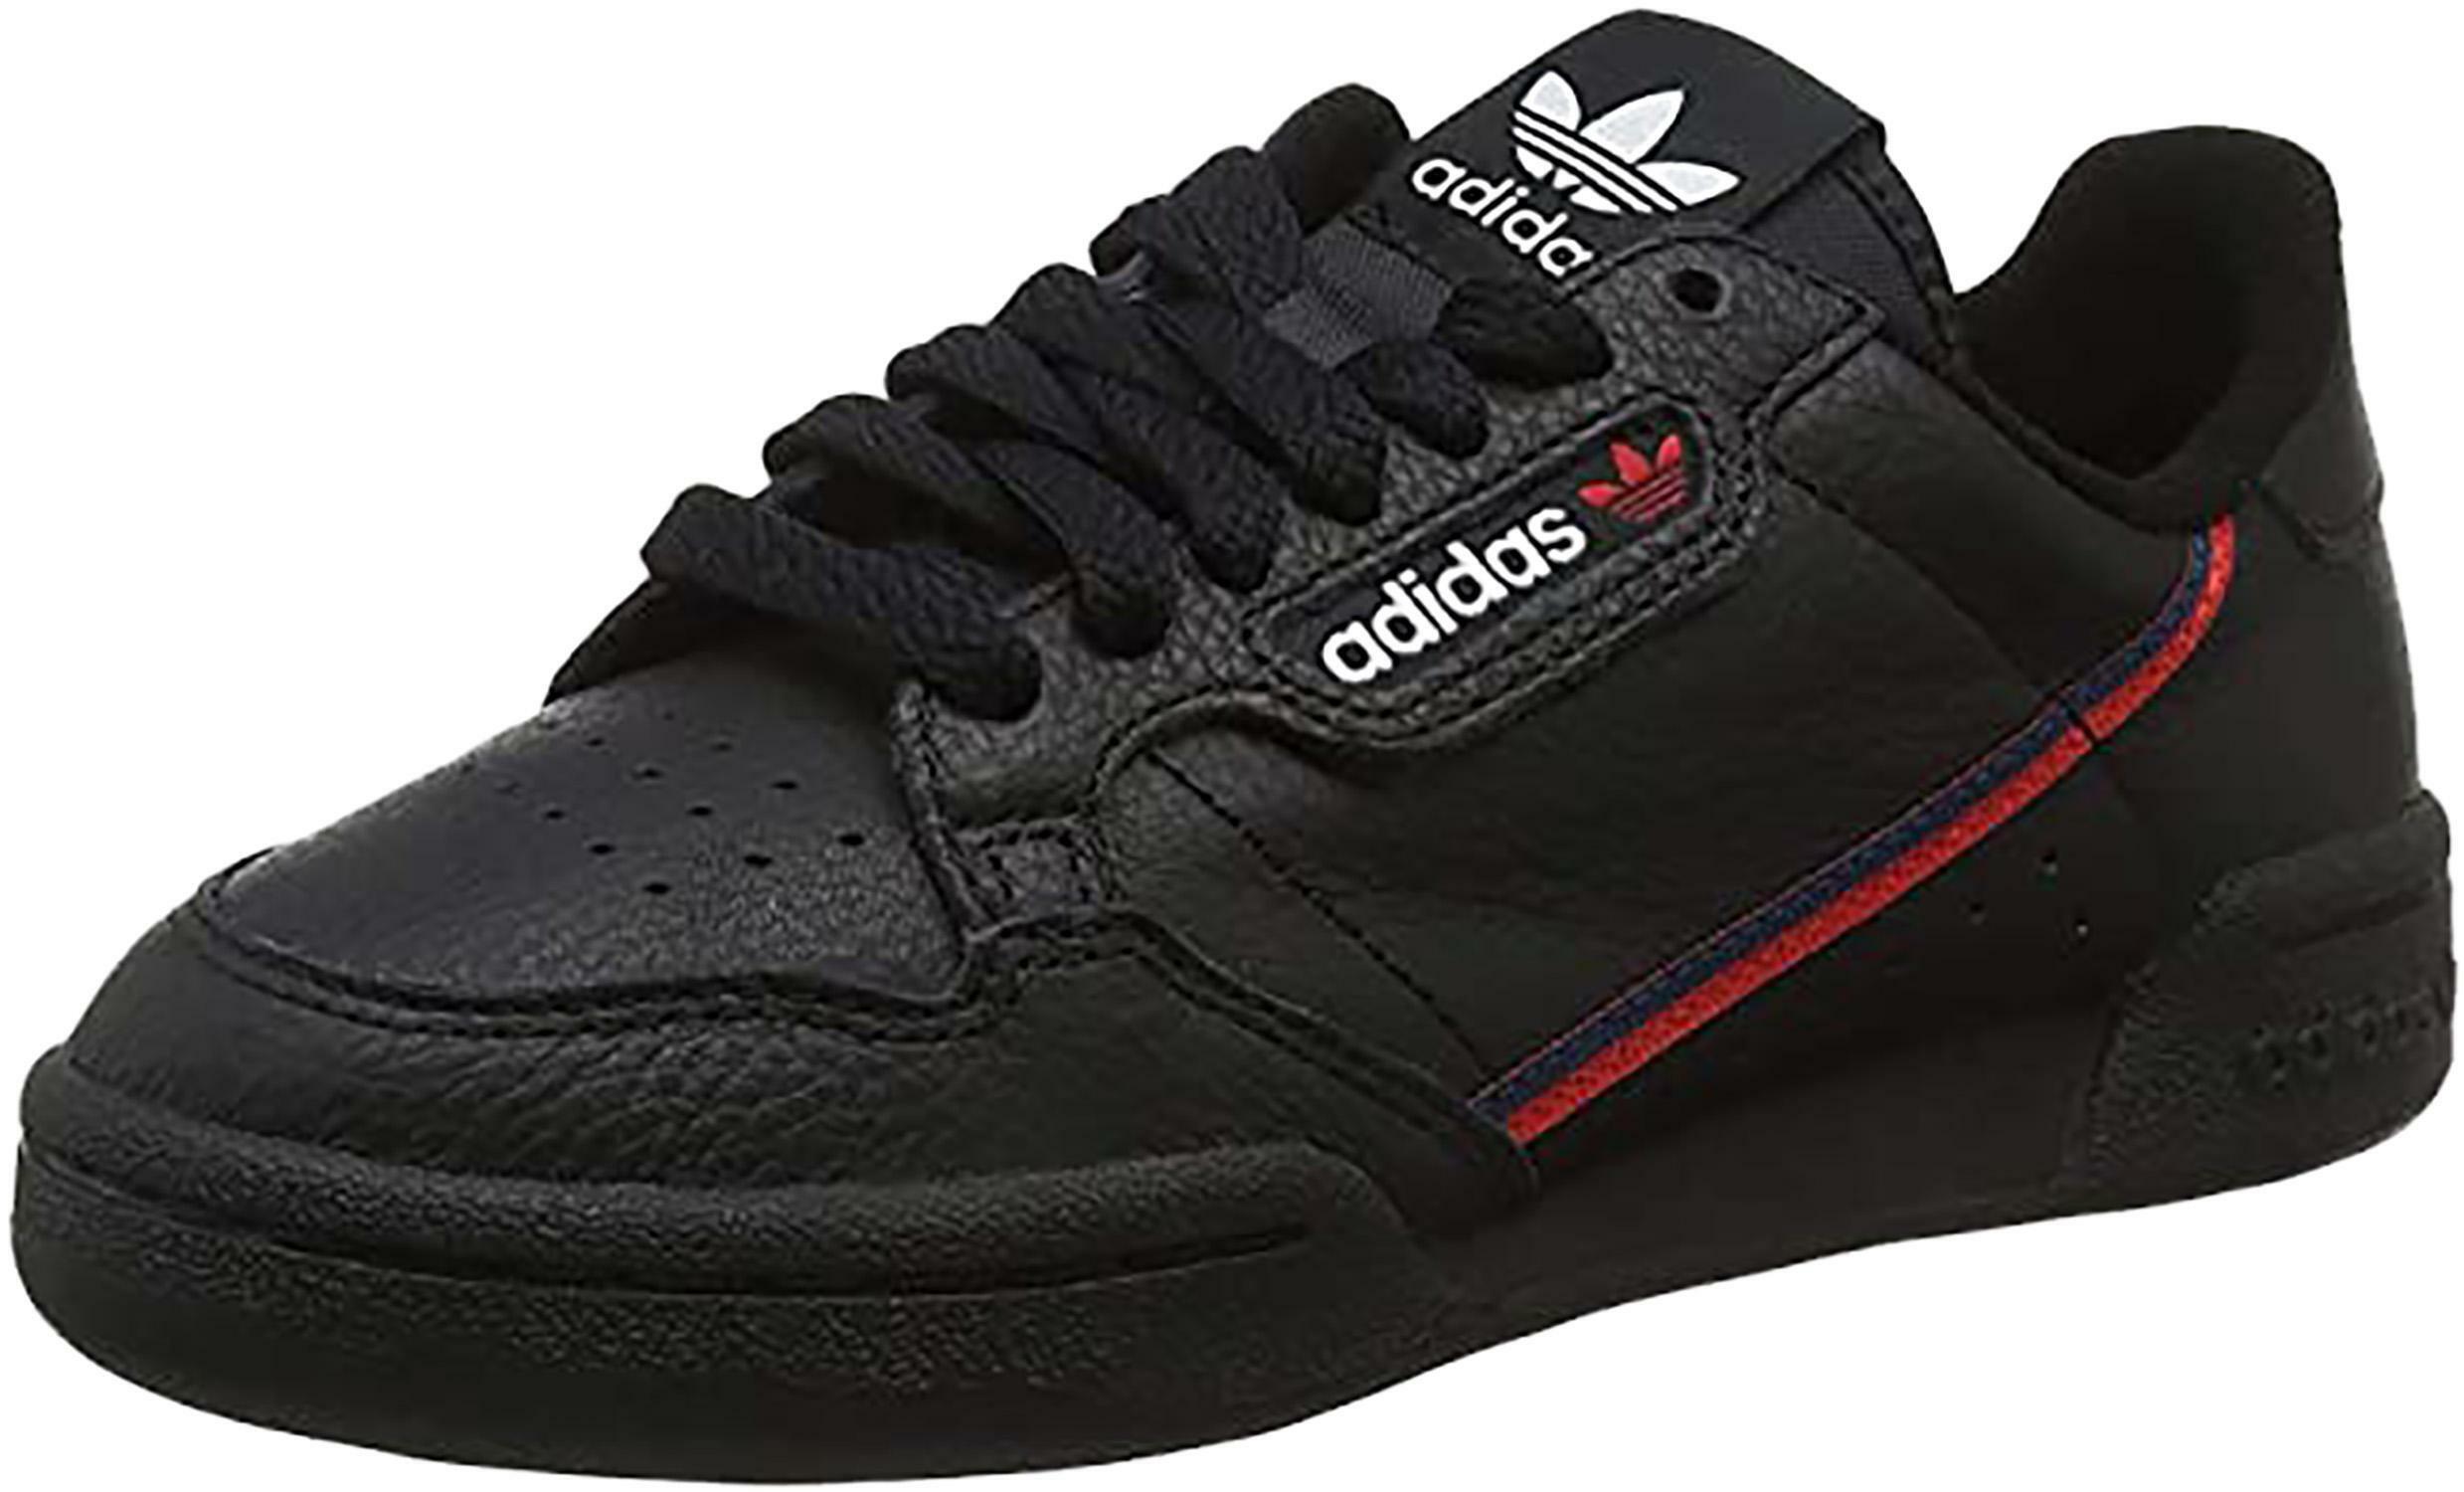 Adidas continental 80 scarpe sportive uomo nere g27707